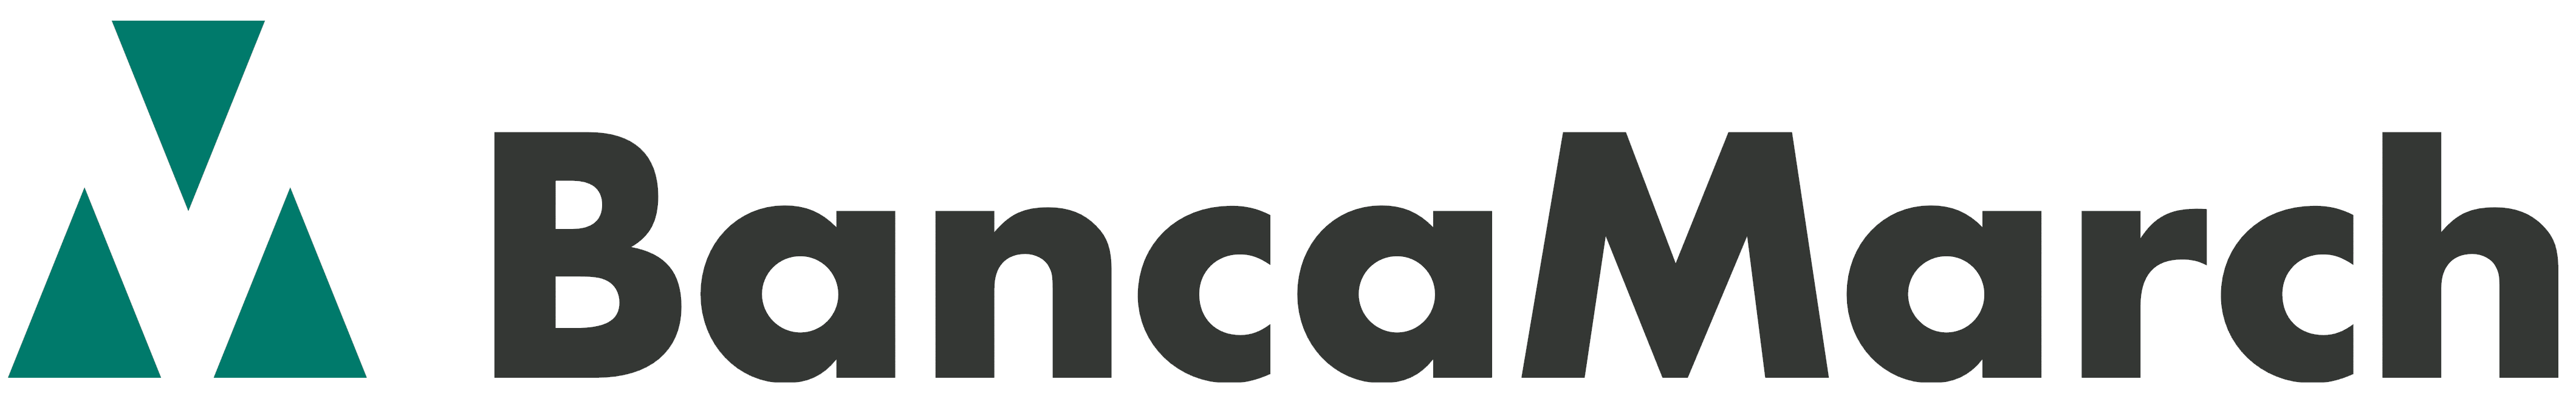 Banca March logo, logotype